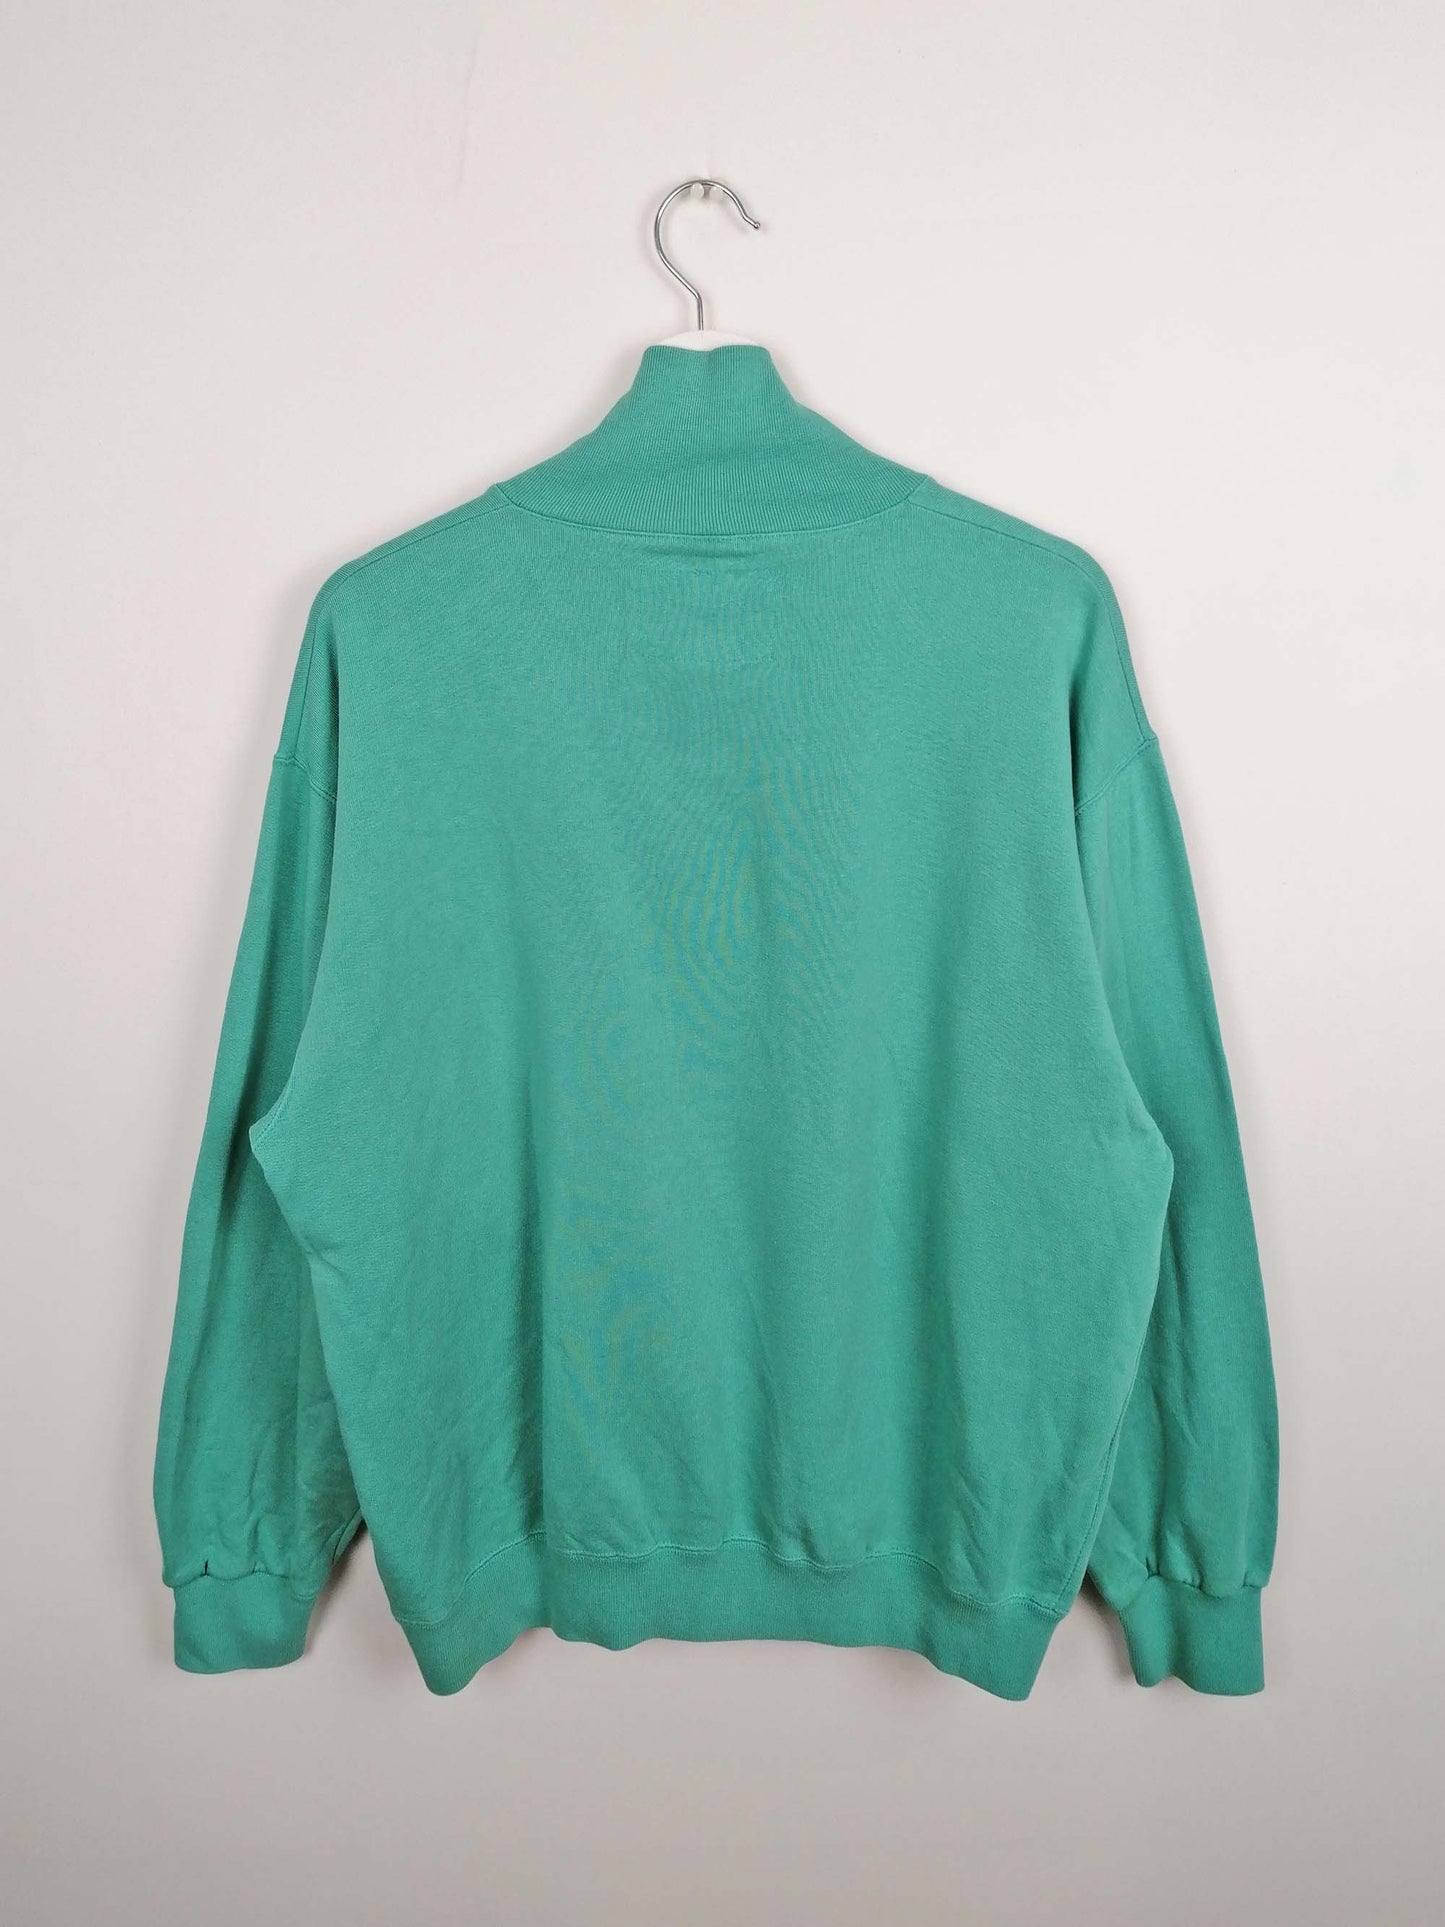 90's CHAMPION Quarter Zip Sweatshirt - size S-L